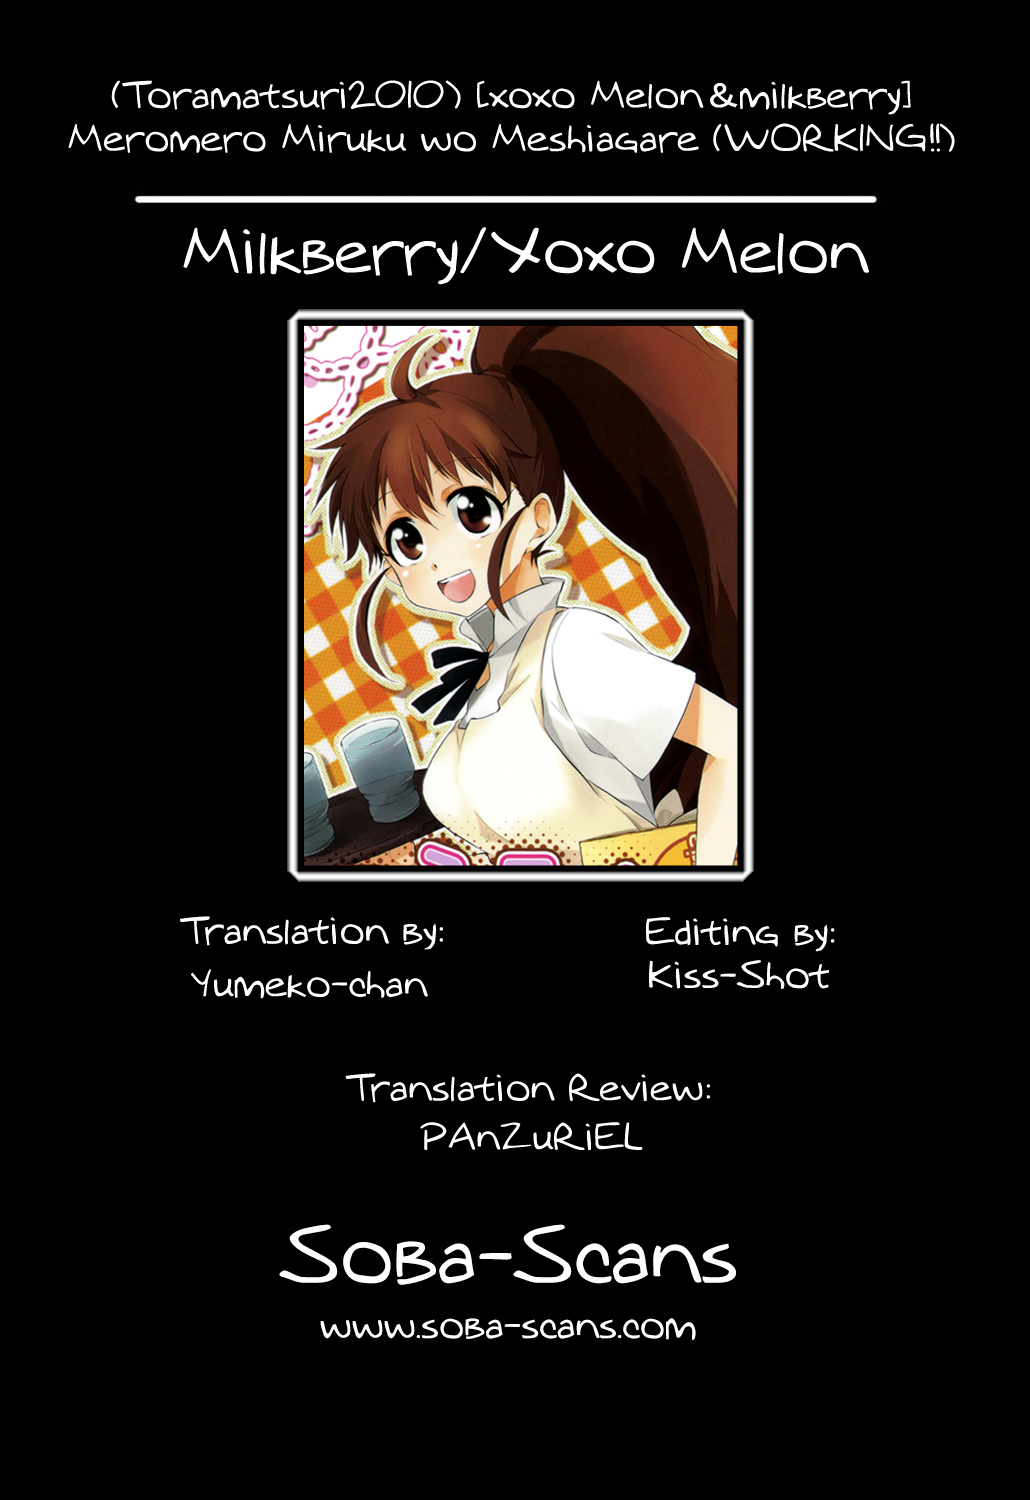 （Toramatsuri2010）[xoxo Melon＆milkberry]メロメロミルクをメシアガレ（WORKING !!）[英語] [そばスキャン]